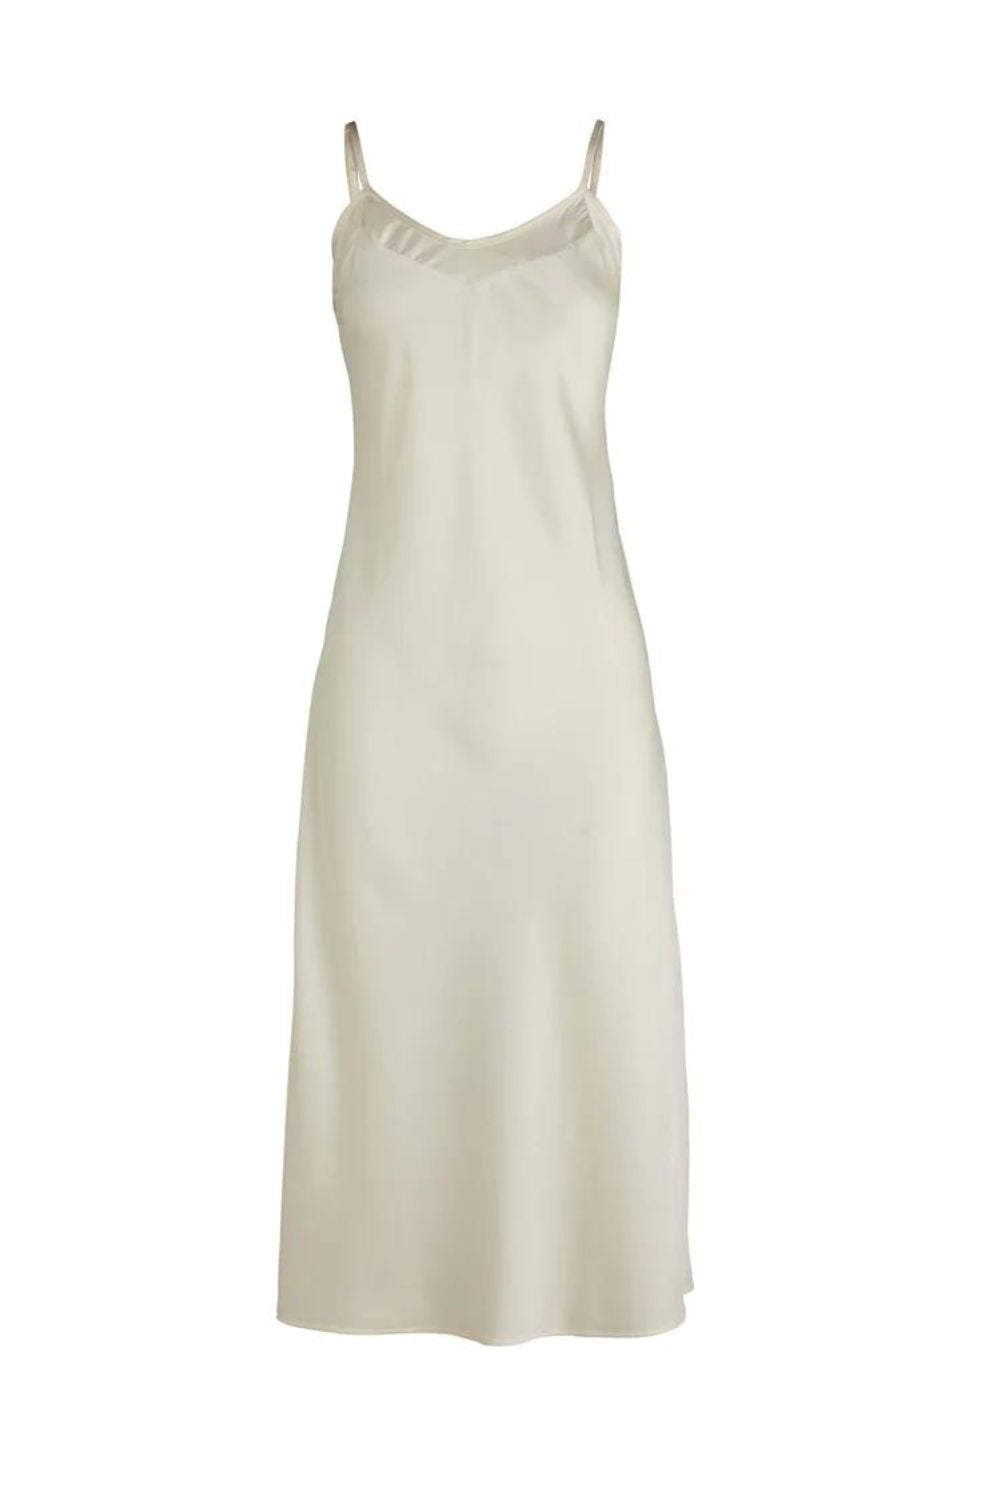 Yana Satin Ivory Slip Dress – Gingerlilly Sleepwear